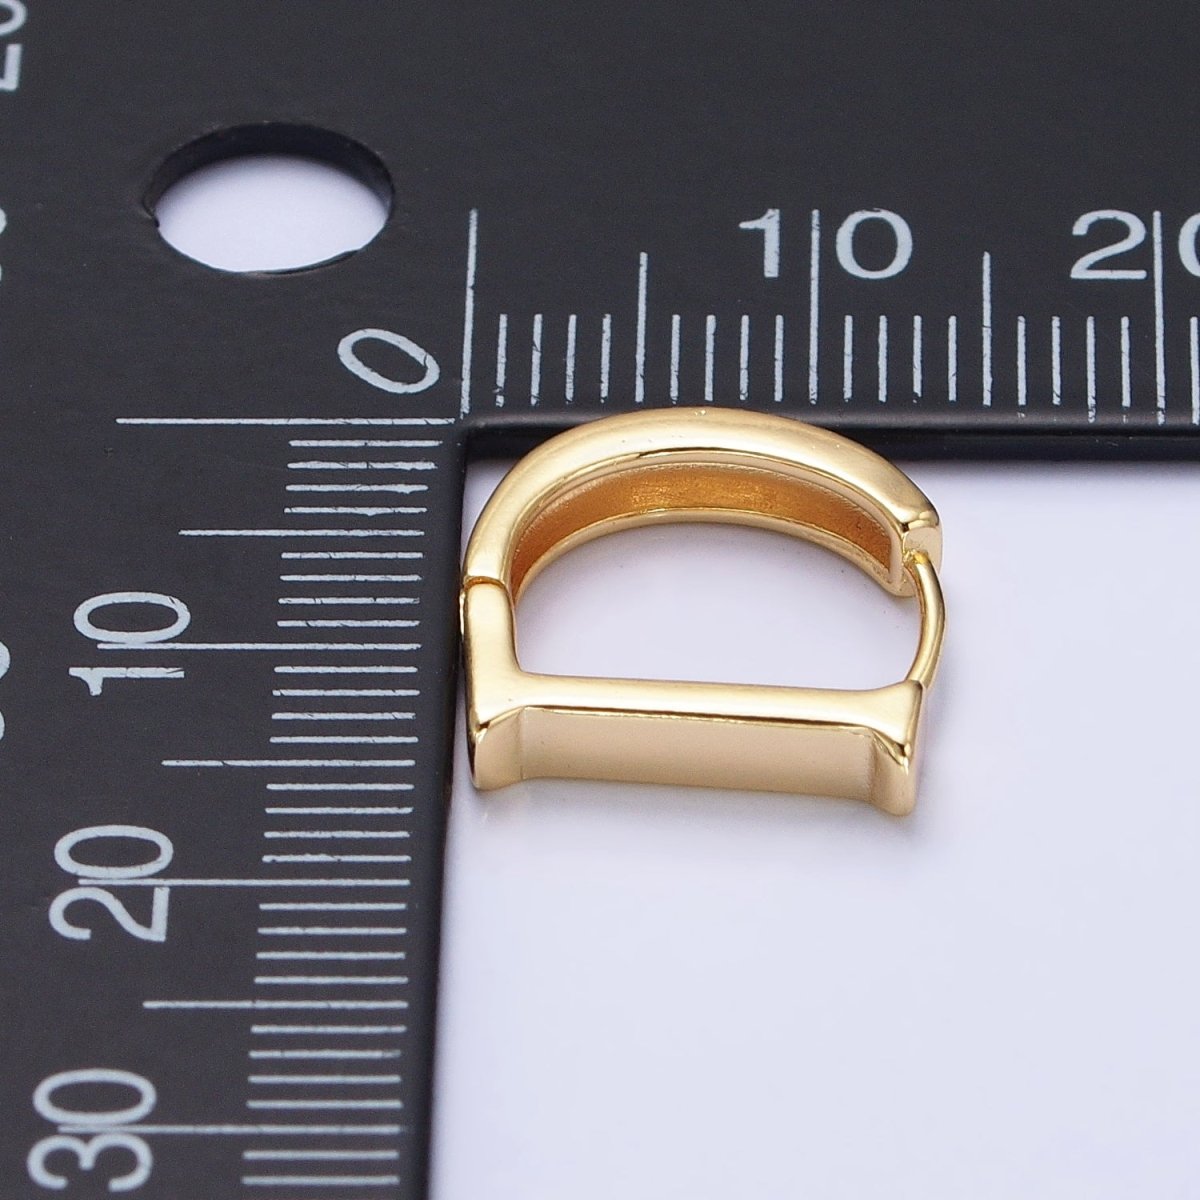 Gold, Silver Geometric D-Shaped Dainty Minimalist Huggie Earrings | AB388 AB510 - DLUXCA